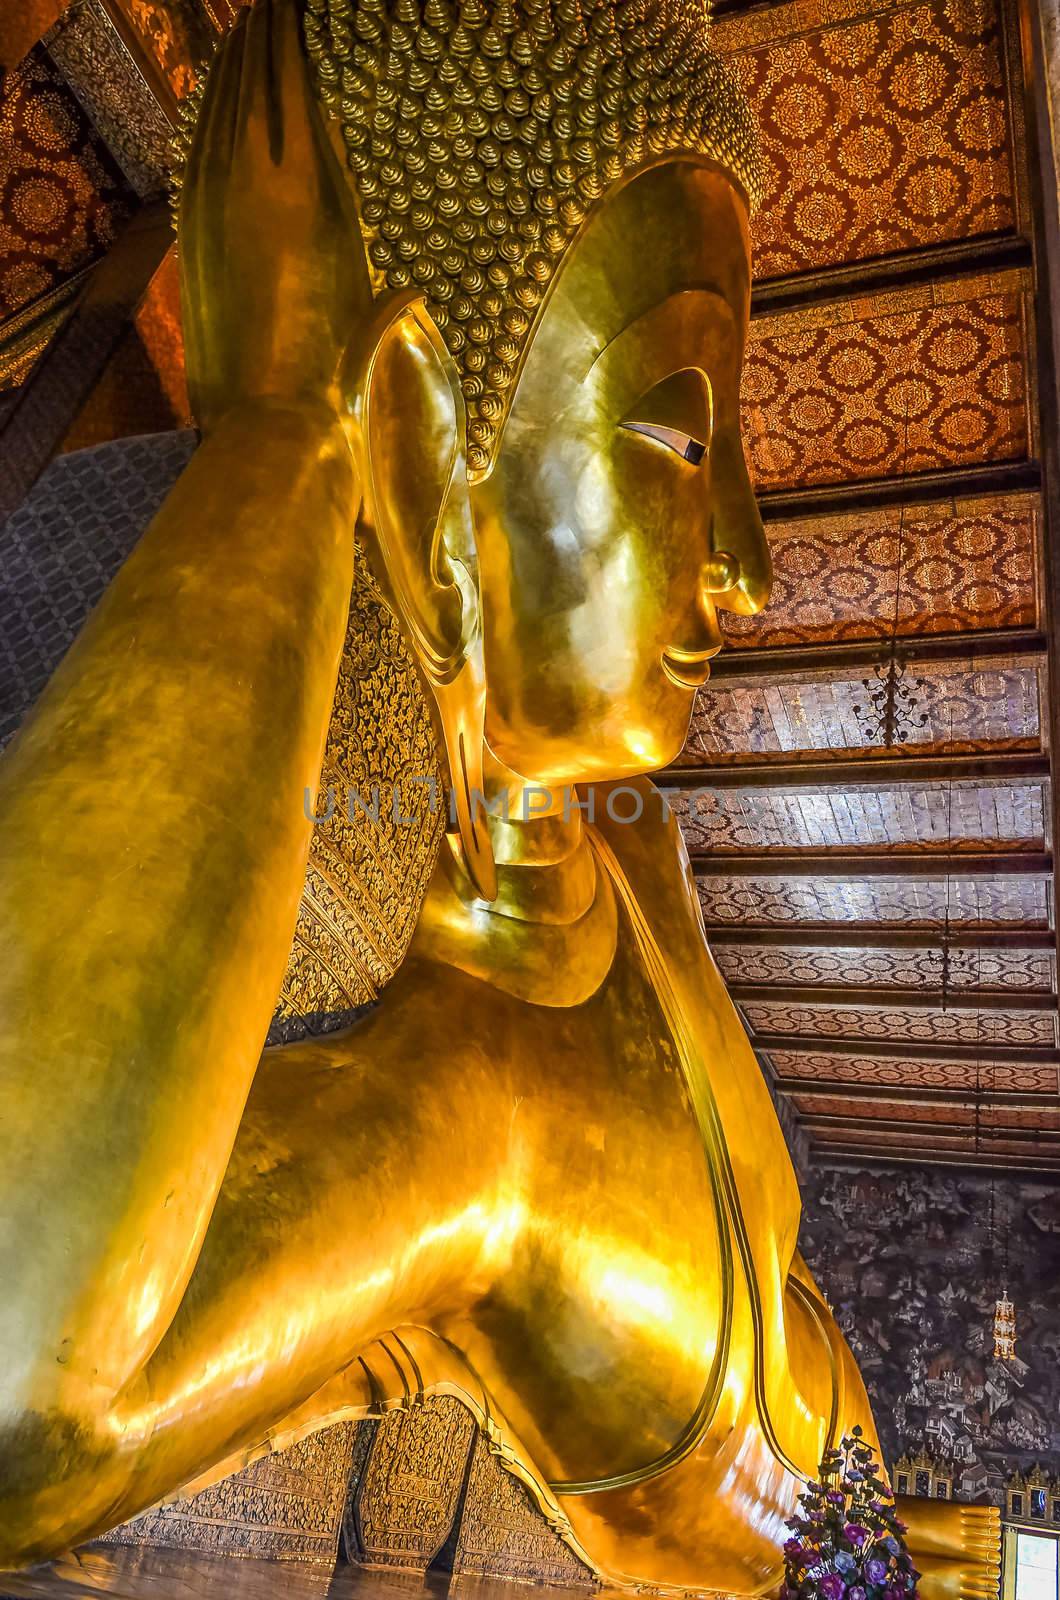 Reclining Buddha gold statue in Wat Pho, Bangkok by martinm303